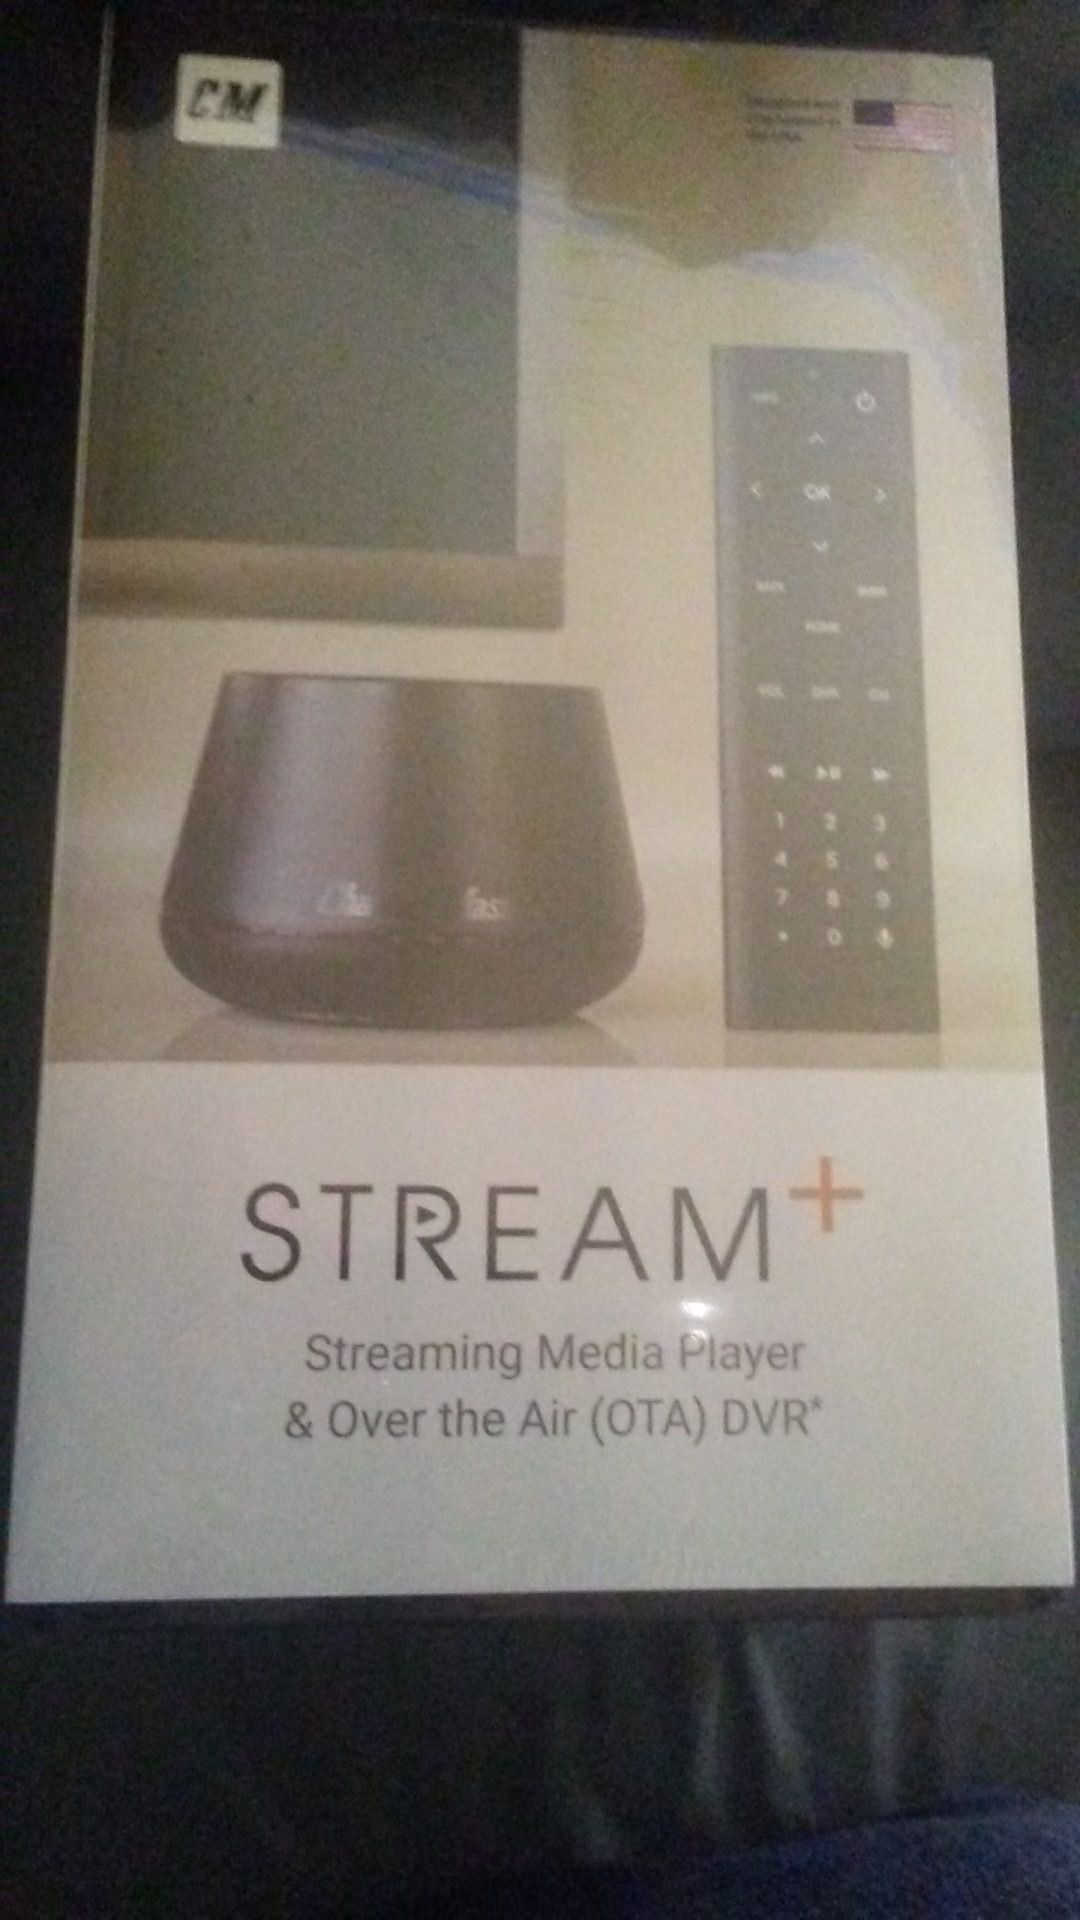 Stream+ streaming & over the air(OTA) DVR